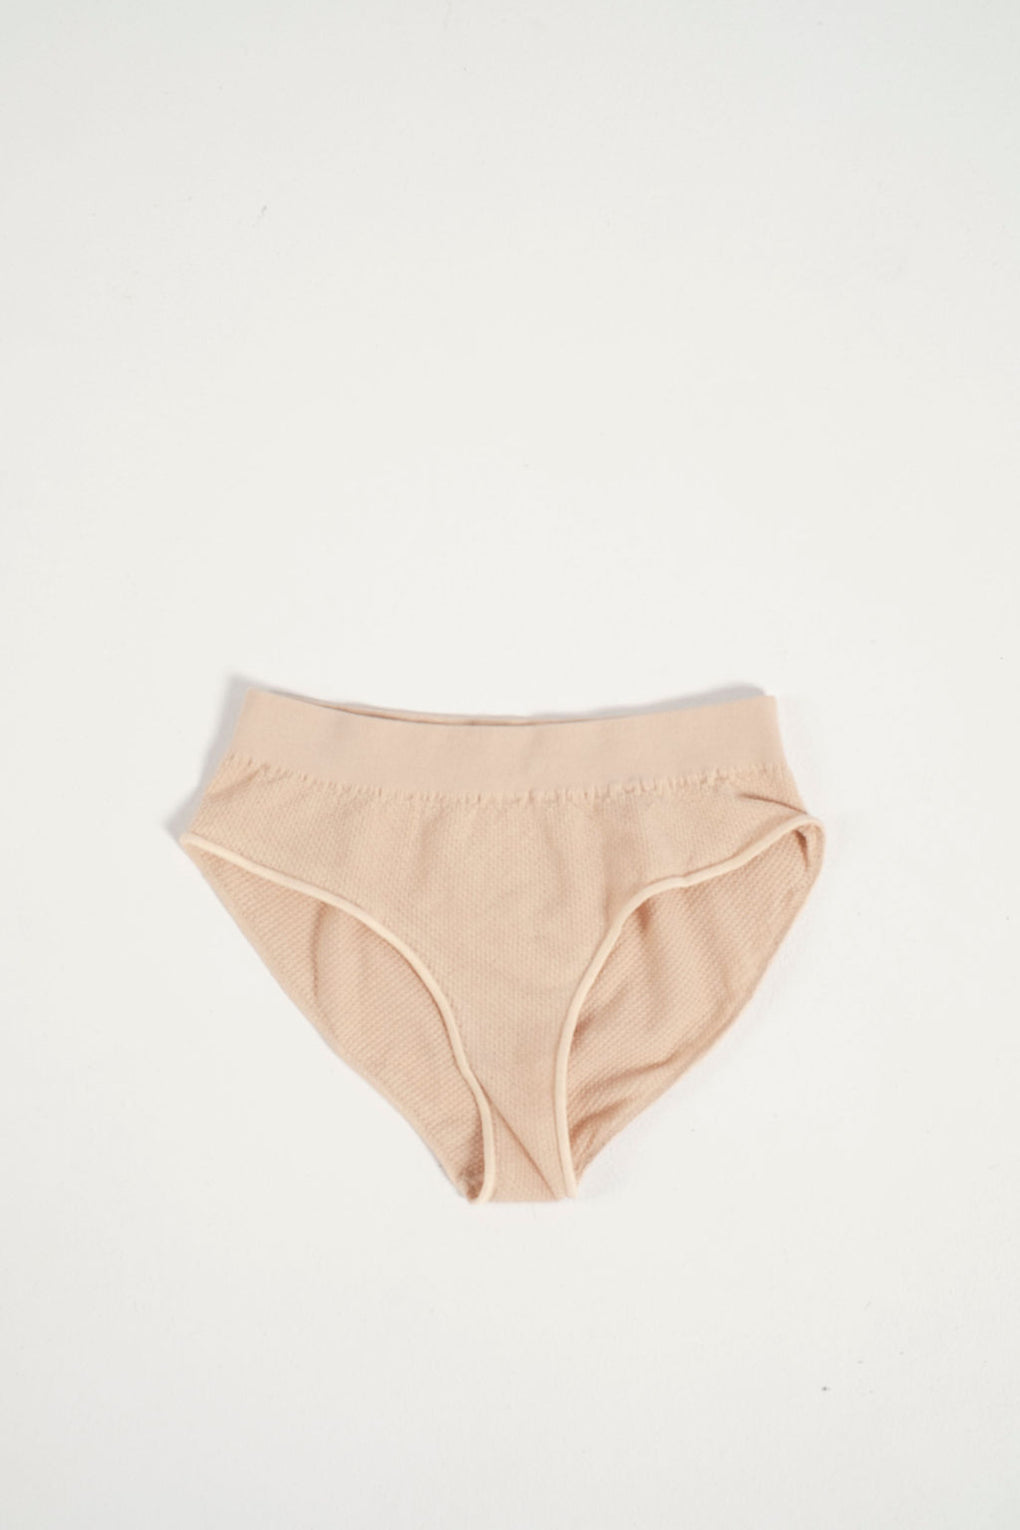 Baserange-Odea underpants-baserange underwear-Idun-St. Paul